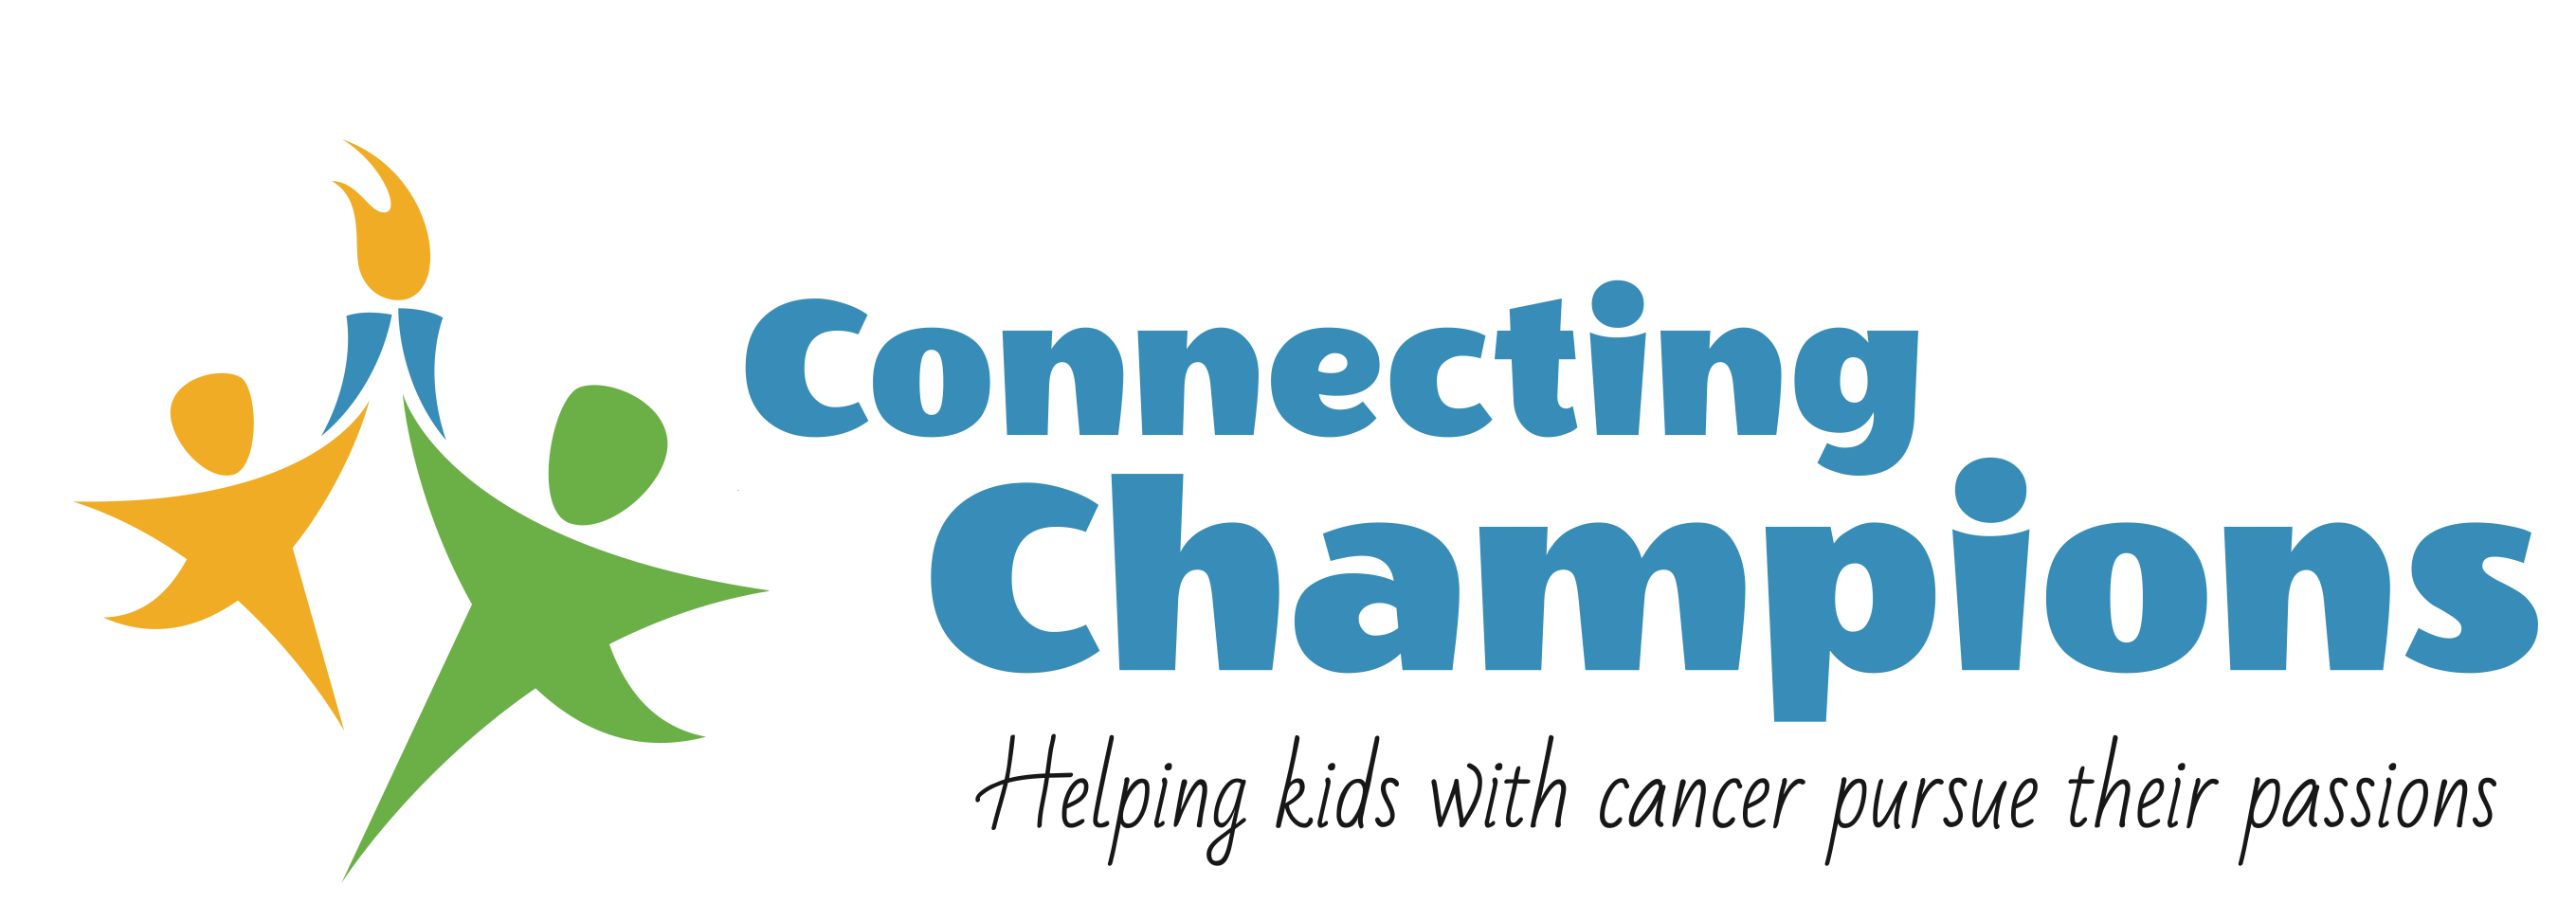 Connecting Champions logo